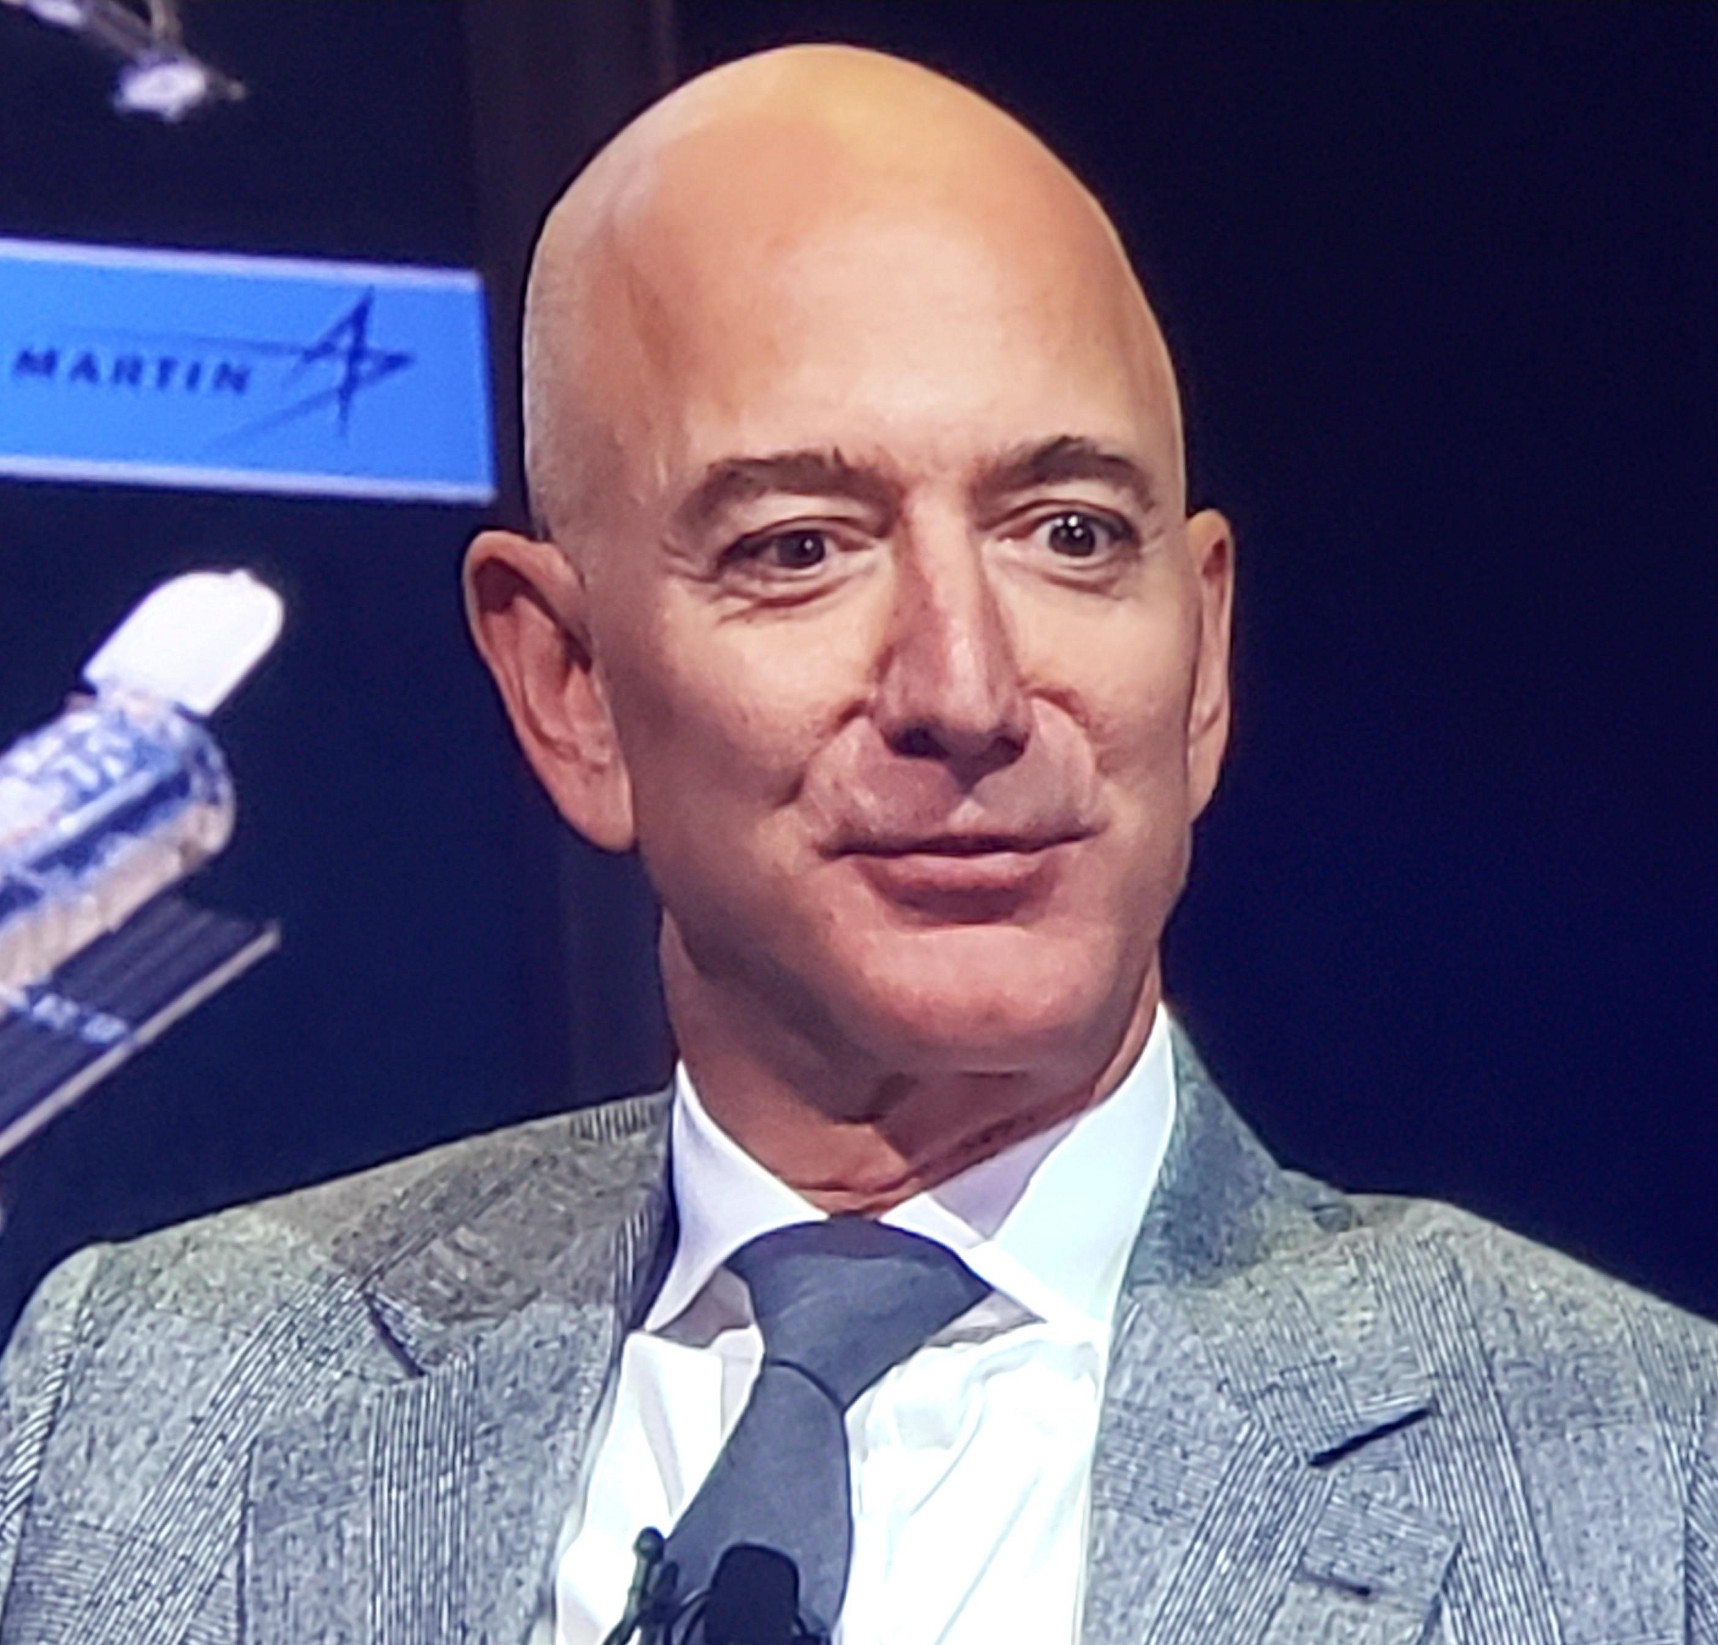 Jeff Bezos at the Legend of Flight Awards